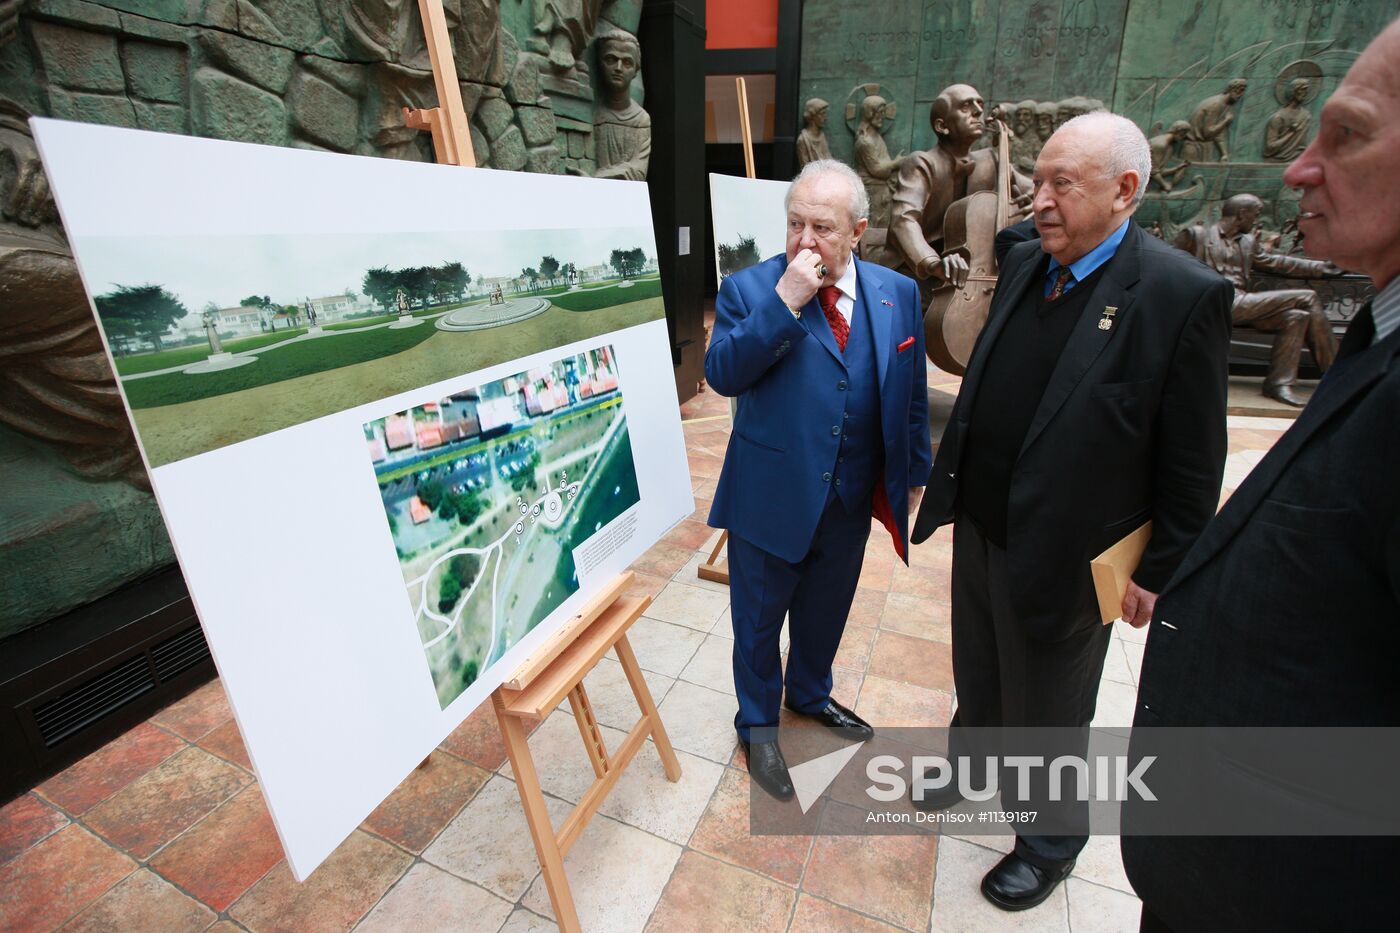 Zurab Tsereteli presents monument to Marina Tsvetaeva in Moscow